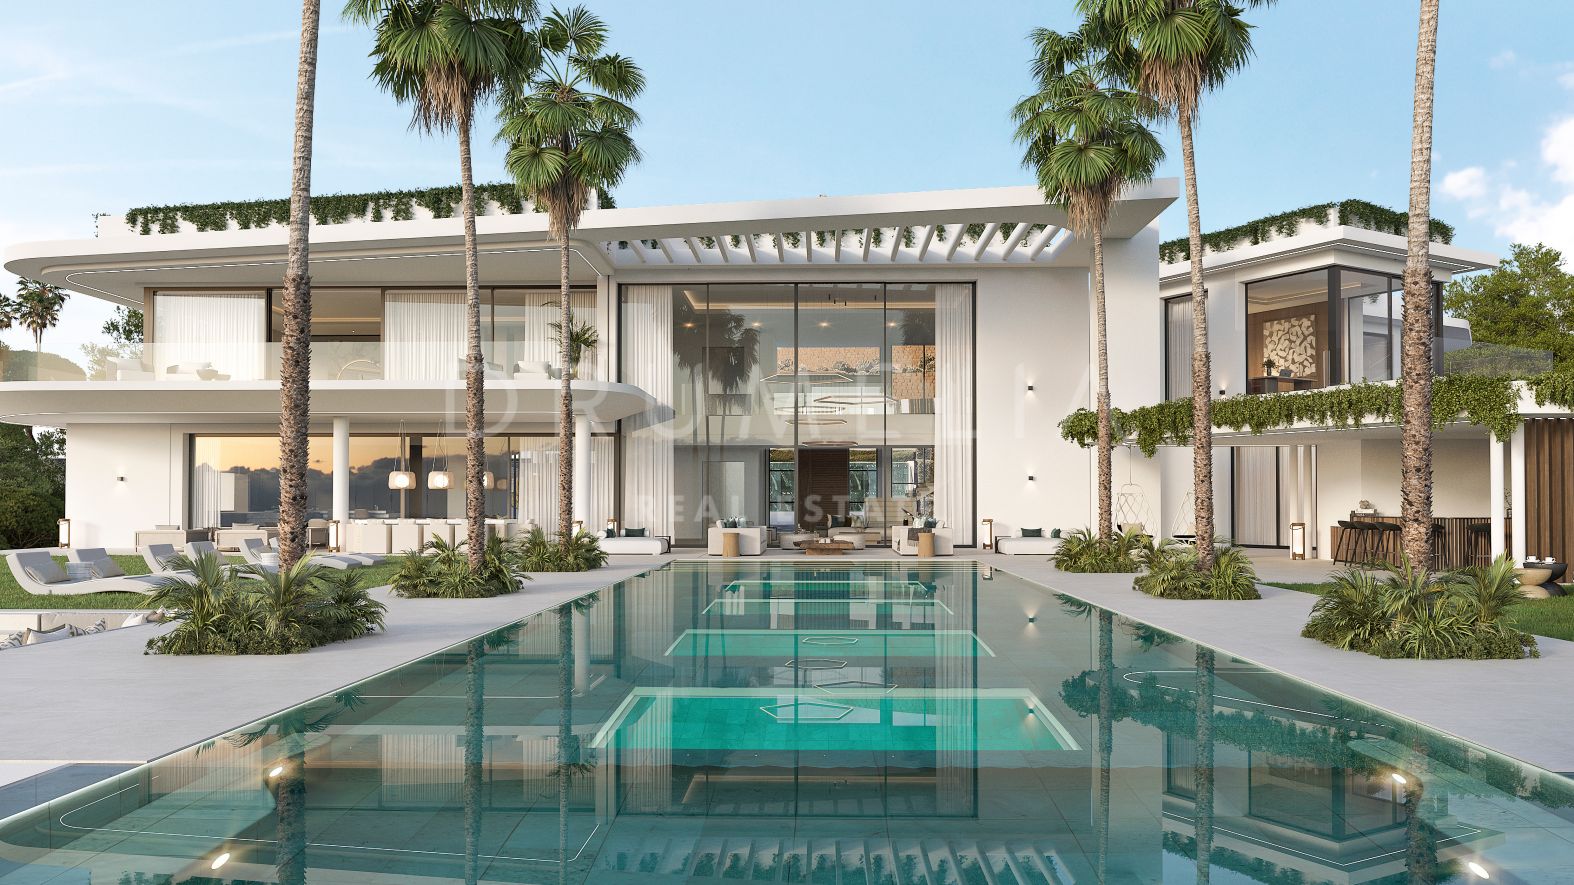 Villa Enso - Brand-new extraordinary modern mega-mansion Villa Enso in high-end La Zagaleta, Benahavis